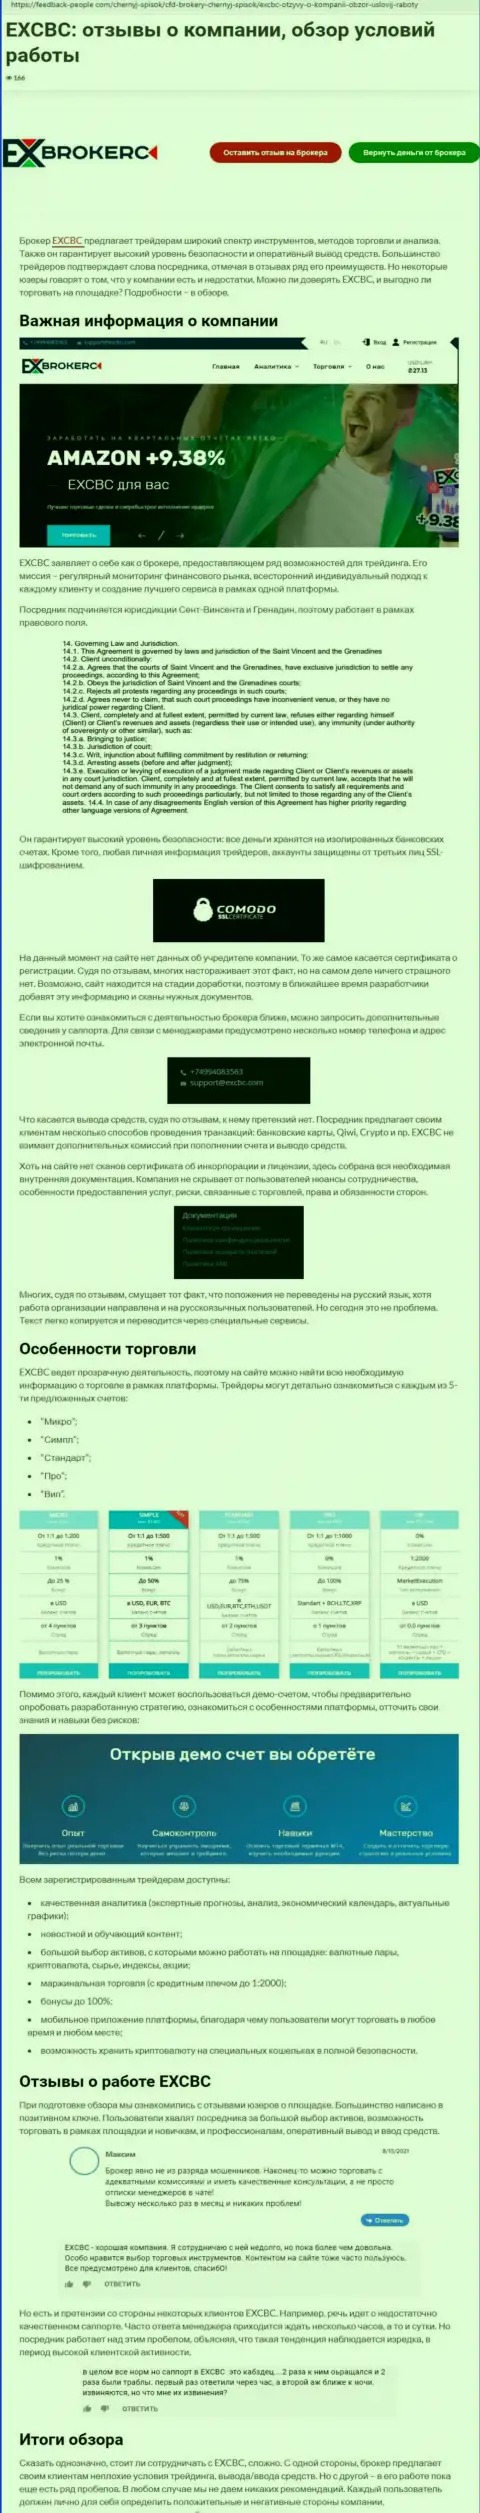 Разбор условий спекулирования Forex компании EX Brokerc на веб-сайте ФеддБэк-Пеопле Ком